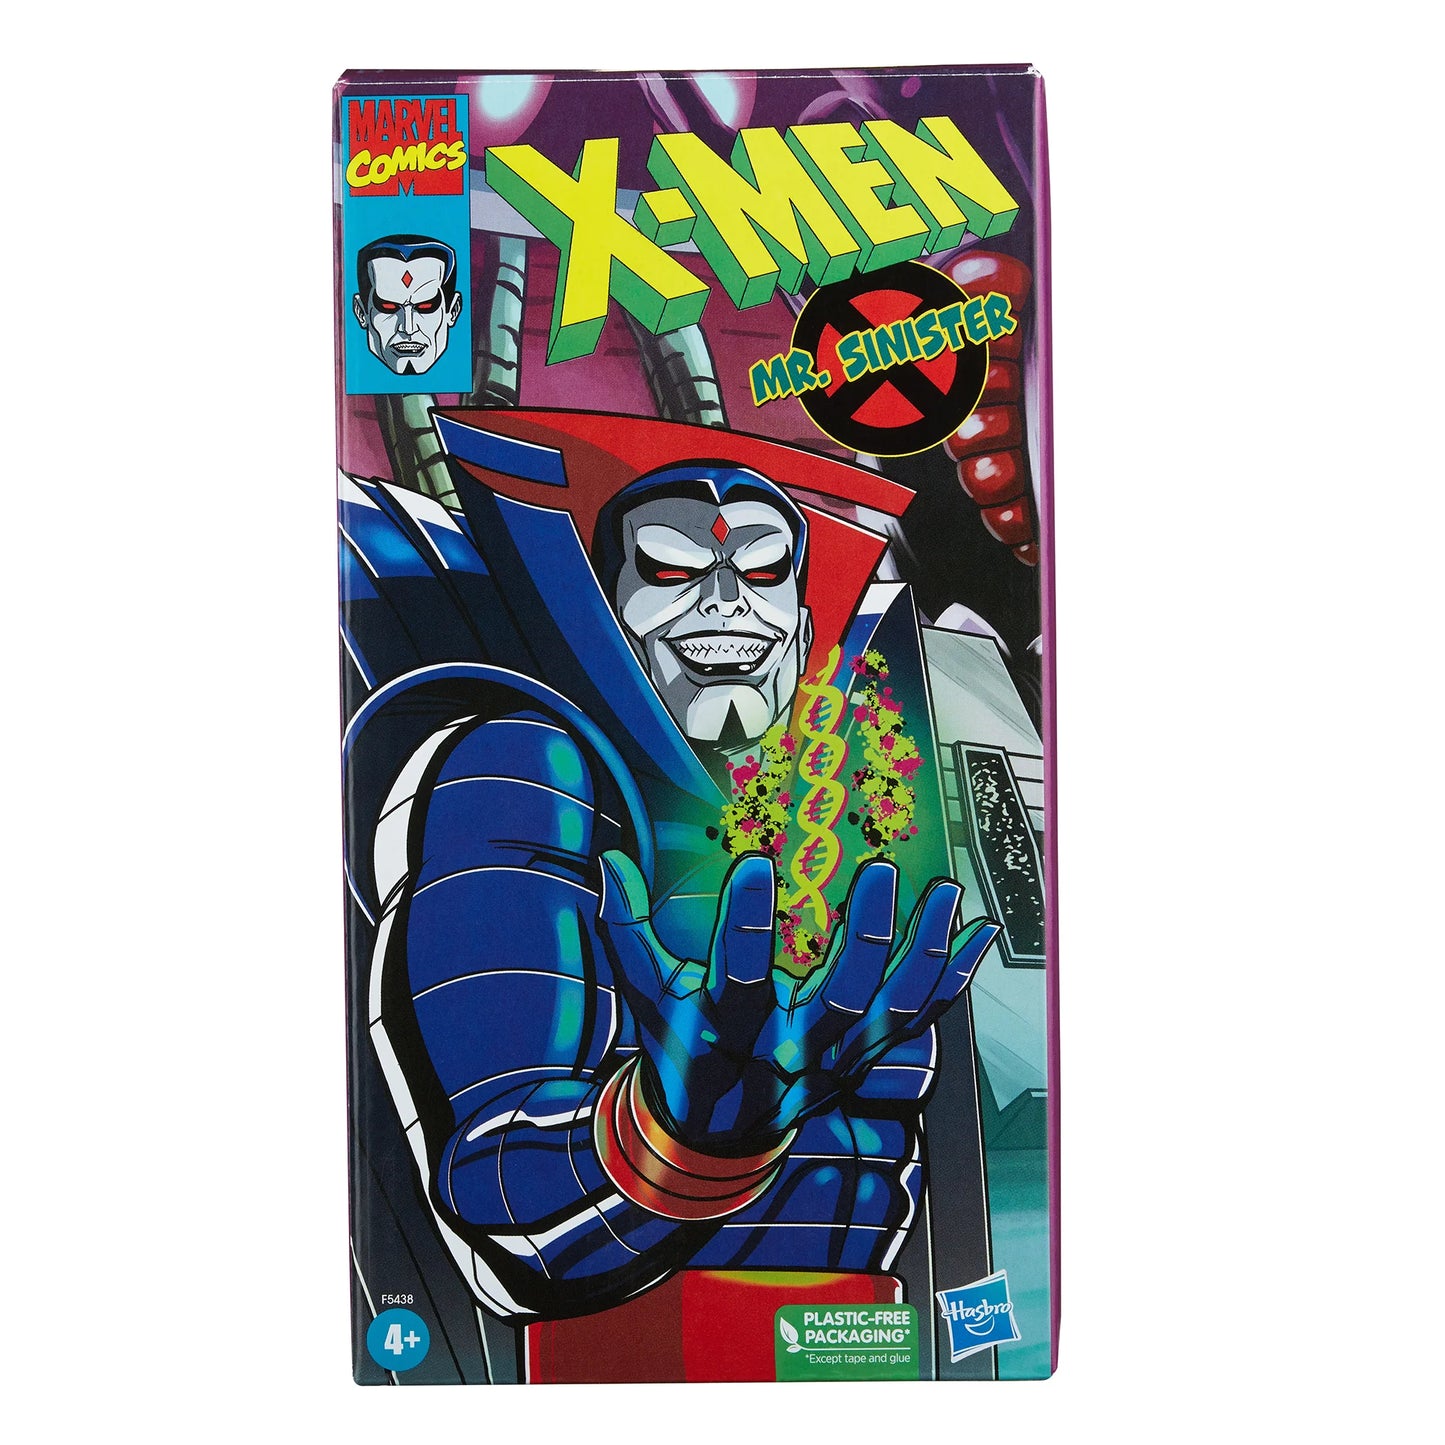 X-men - Mr. Sinister - Marvel Legends Action Figure by Hasbro